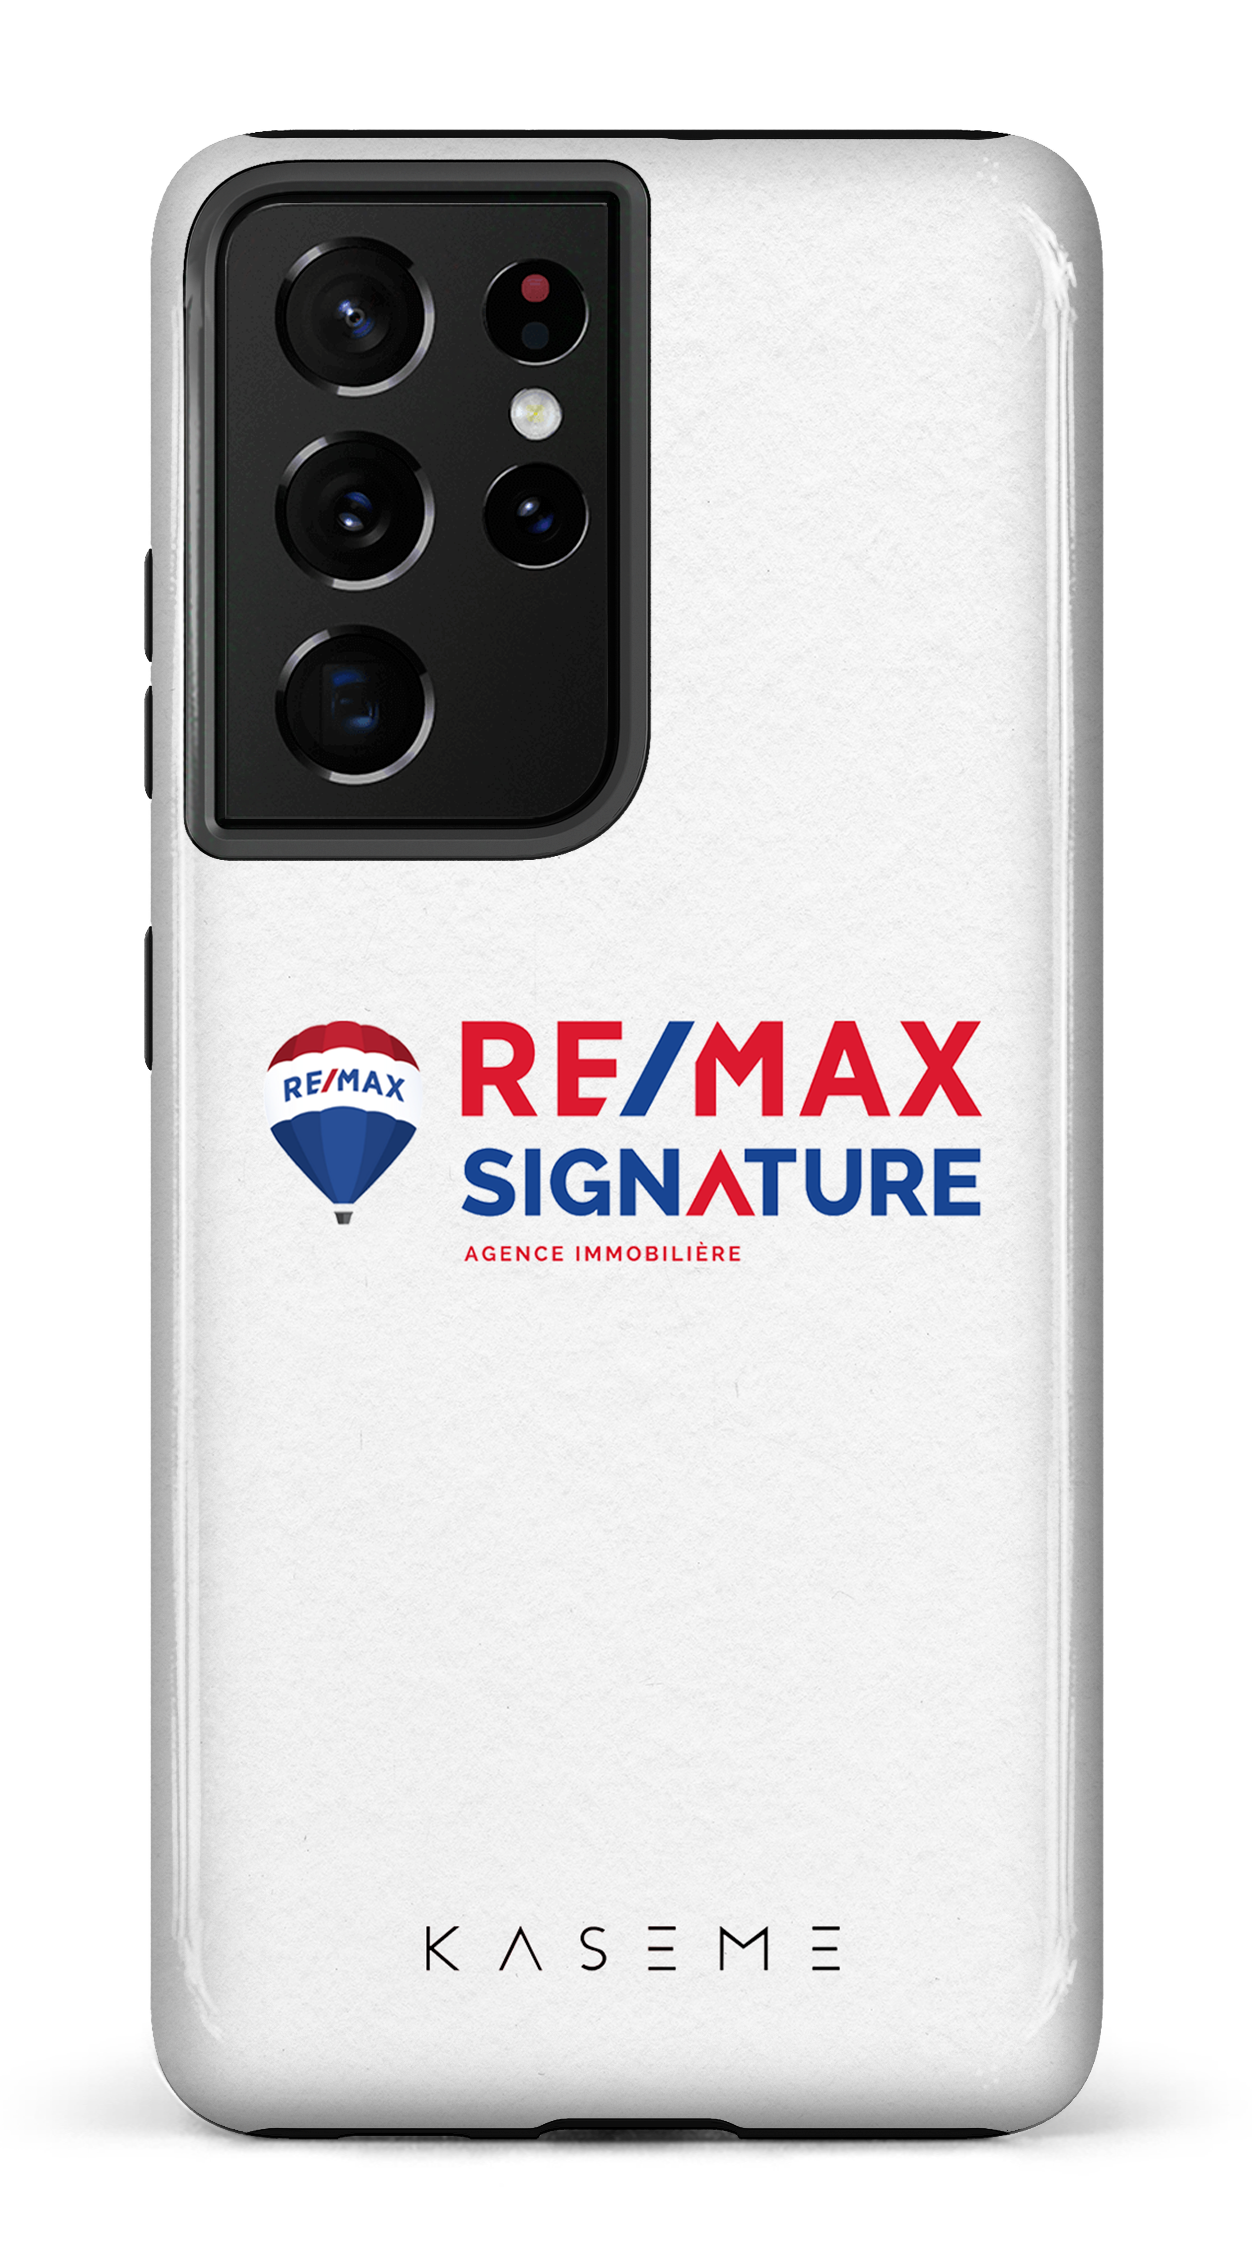 Remax Signature Blanc - Galaxy S21 Ultra